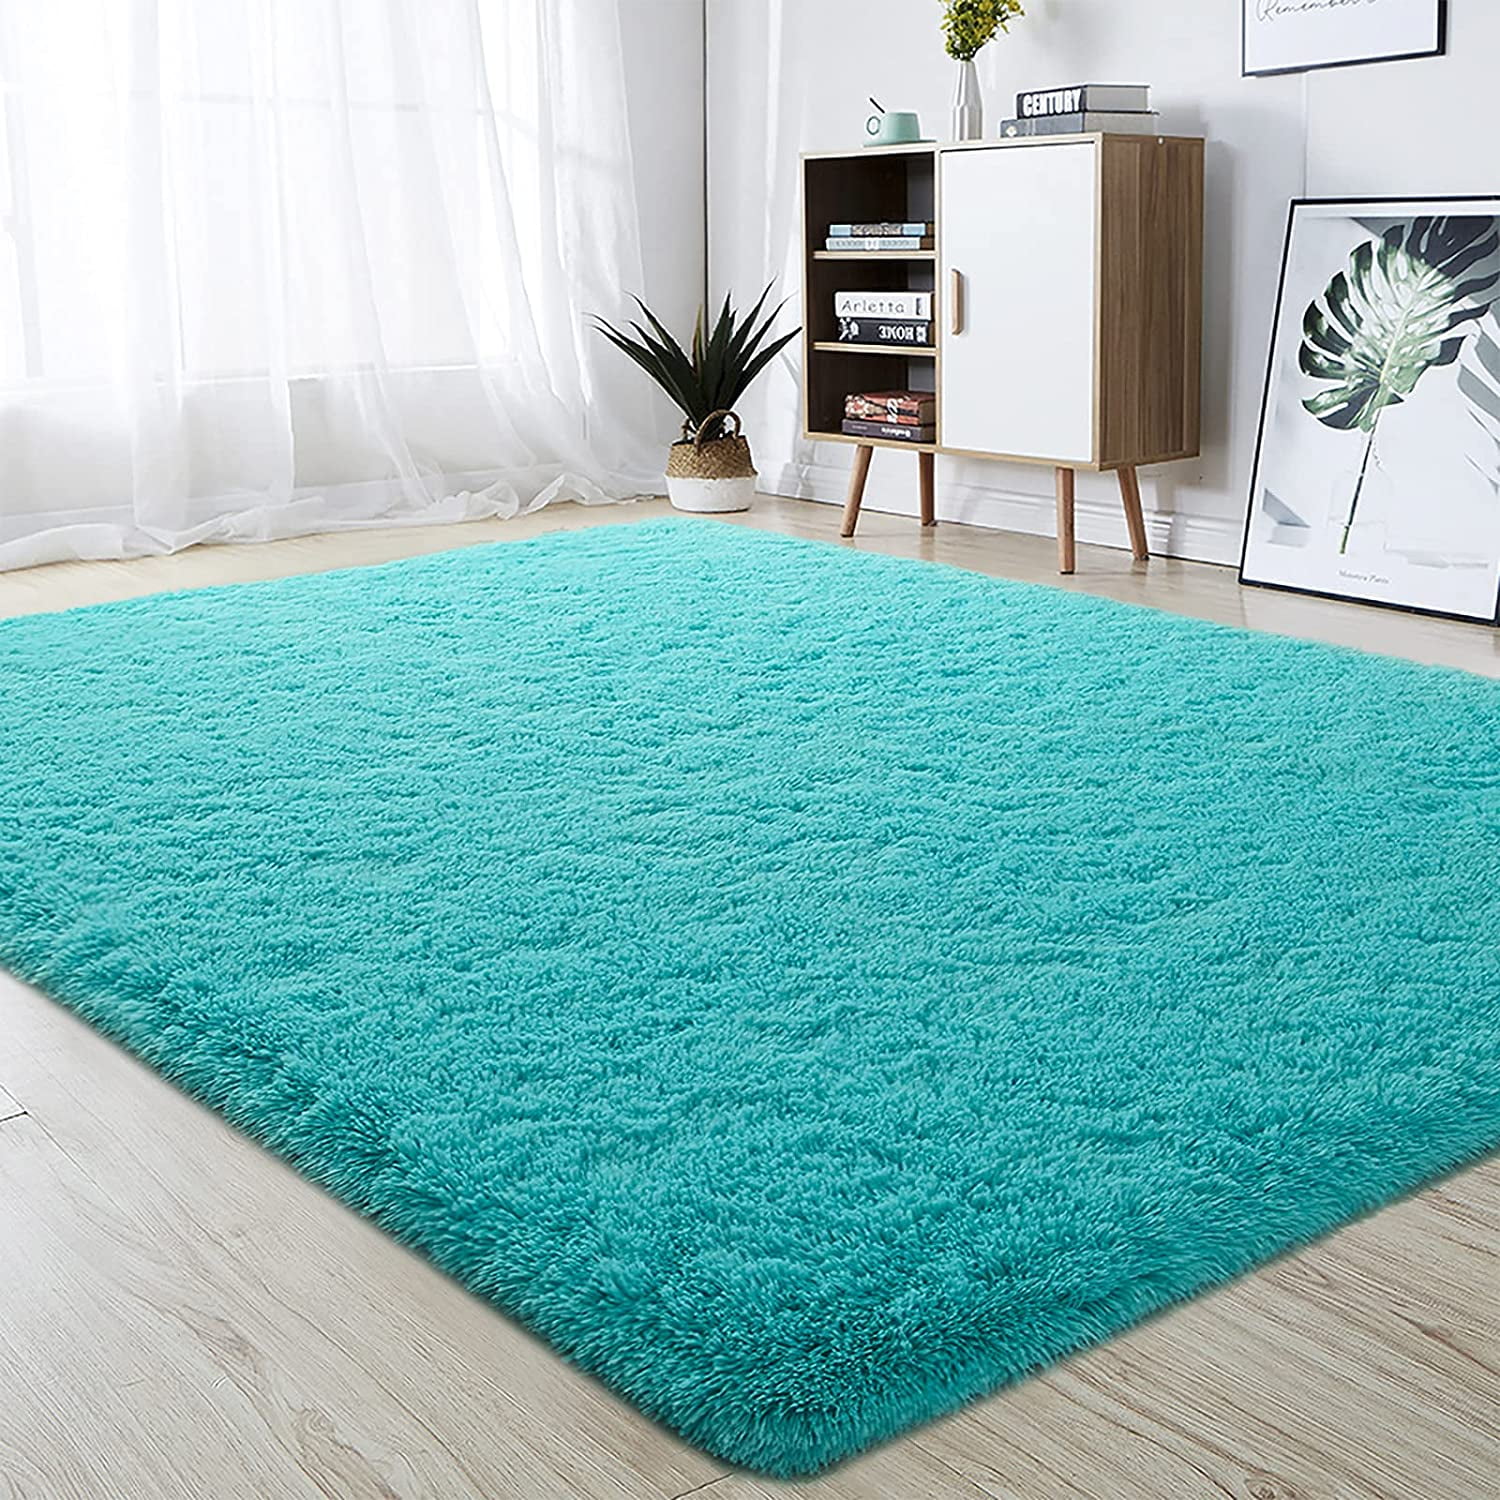 turquoise carpet rug